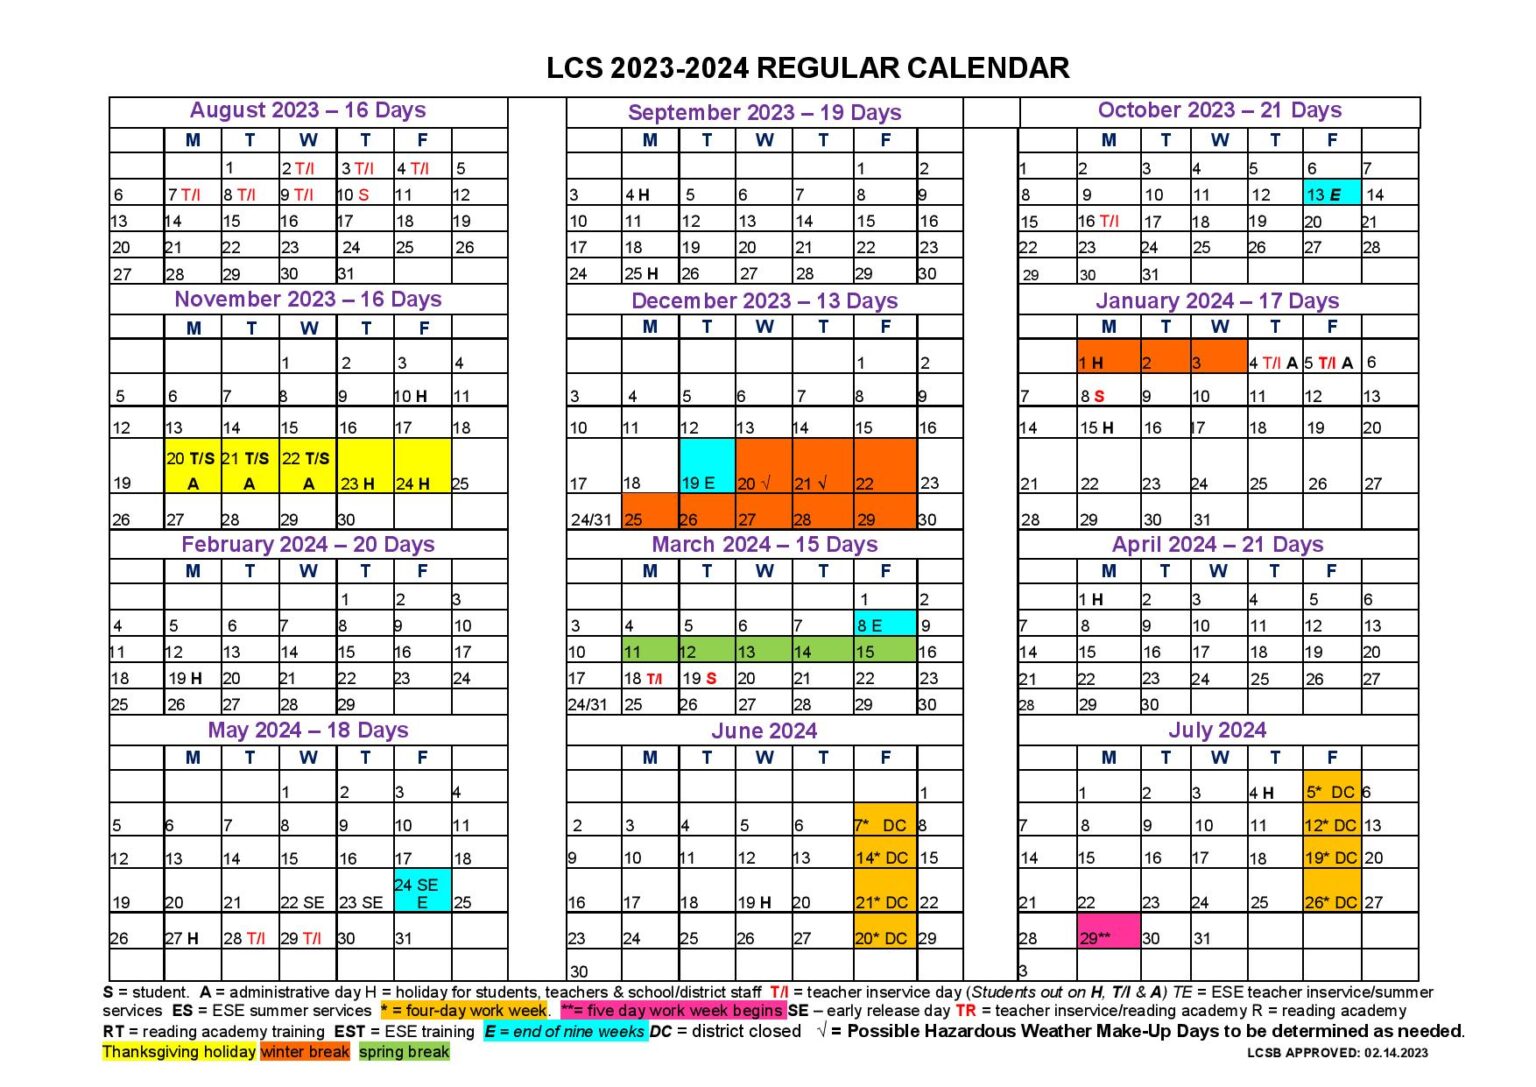 Leon County Schools Calendar Holidays 2023-2024